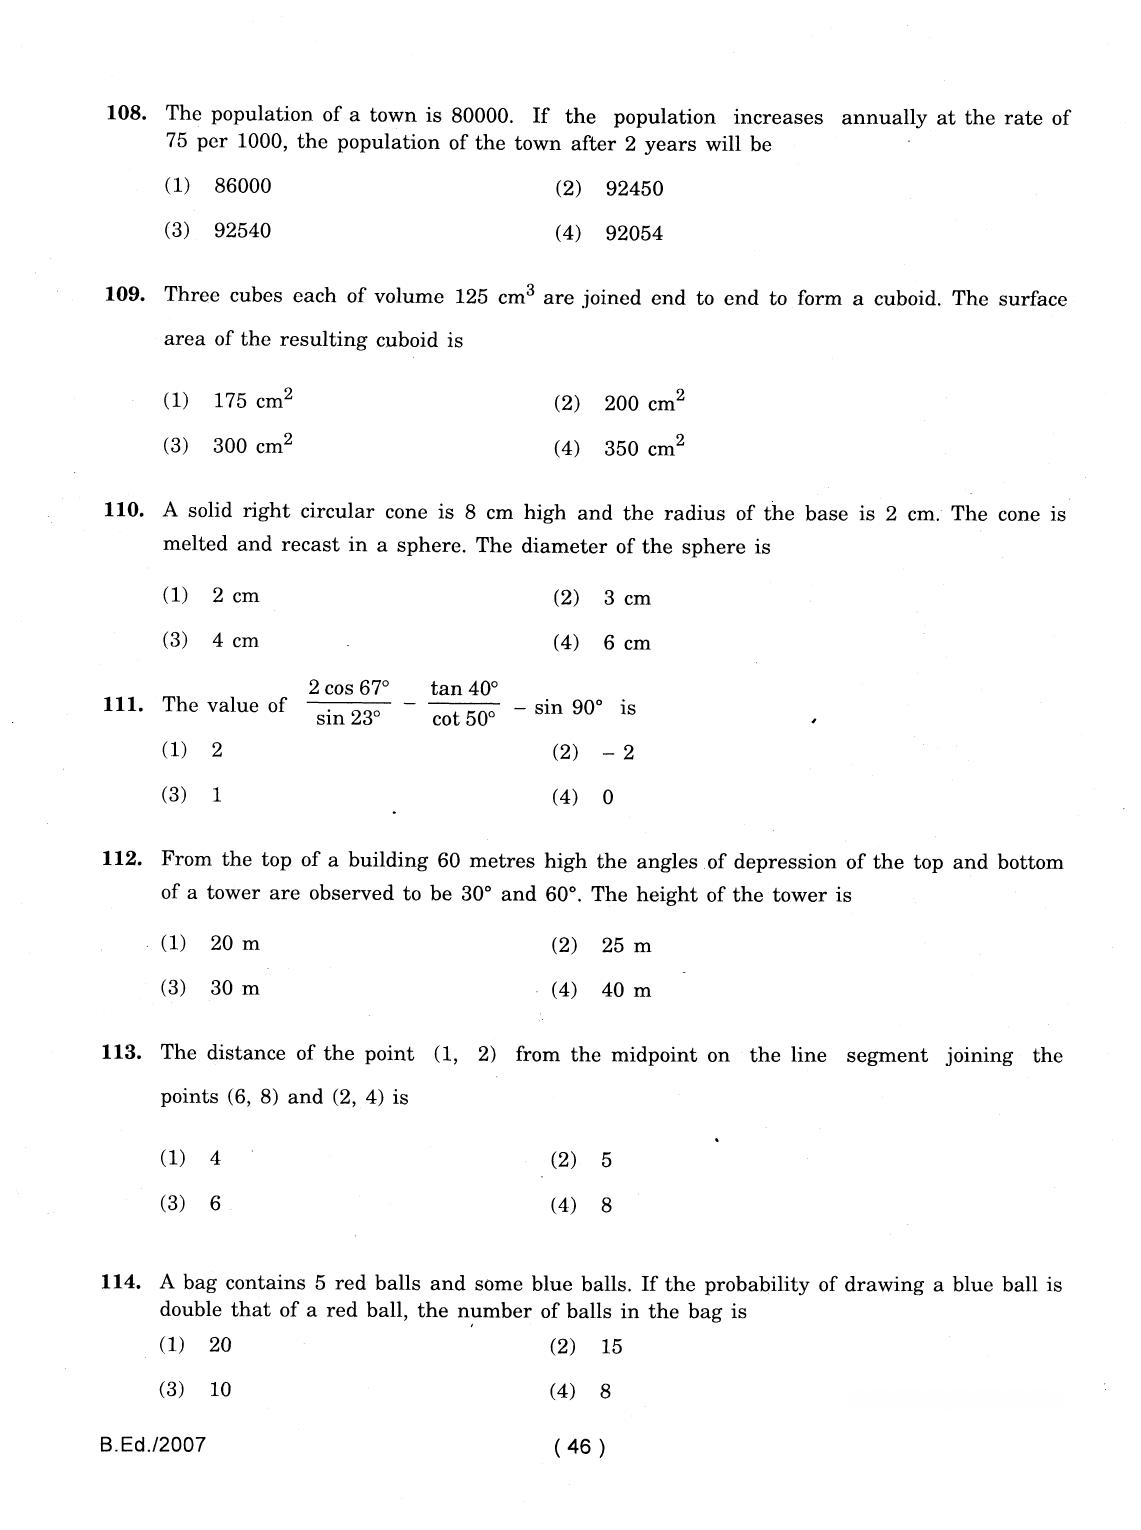 IGNOU B.Ed 2007 Question Paper - Page 46